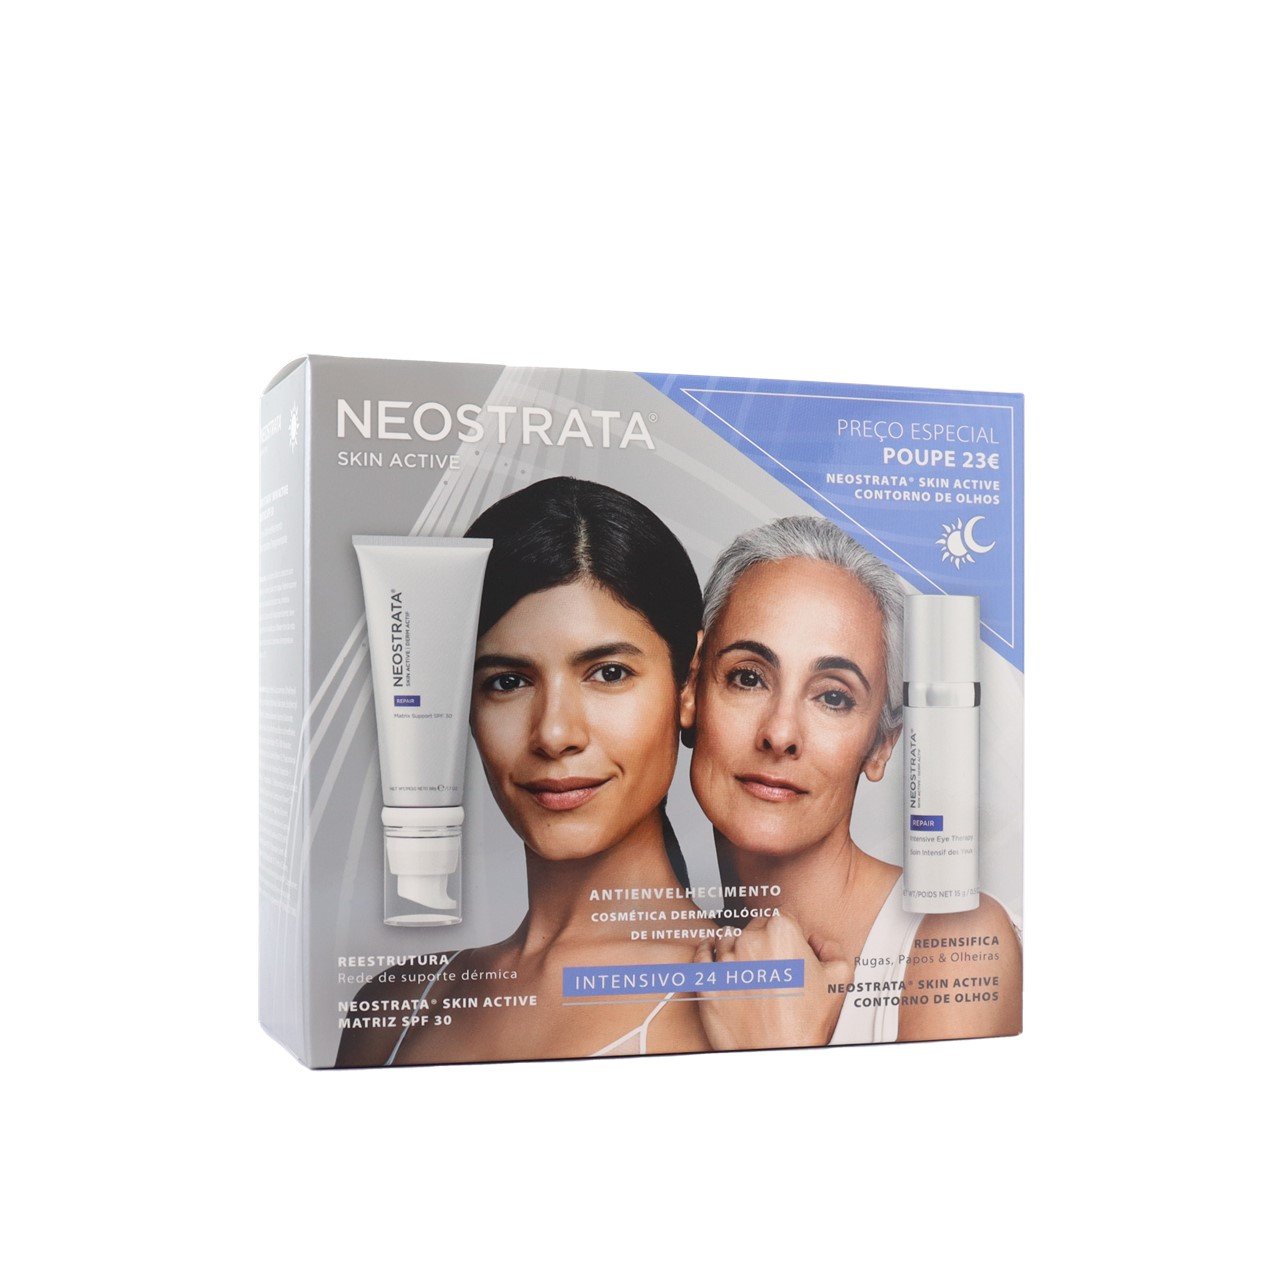 NeoStrata Skin Active Matrix Support SPF30 50g + Eye Therapy 15g